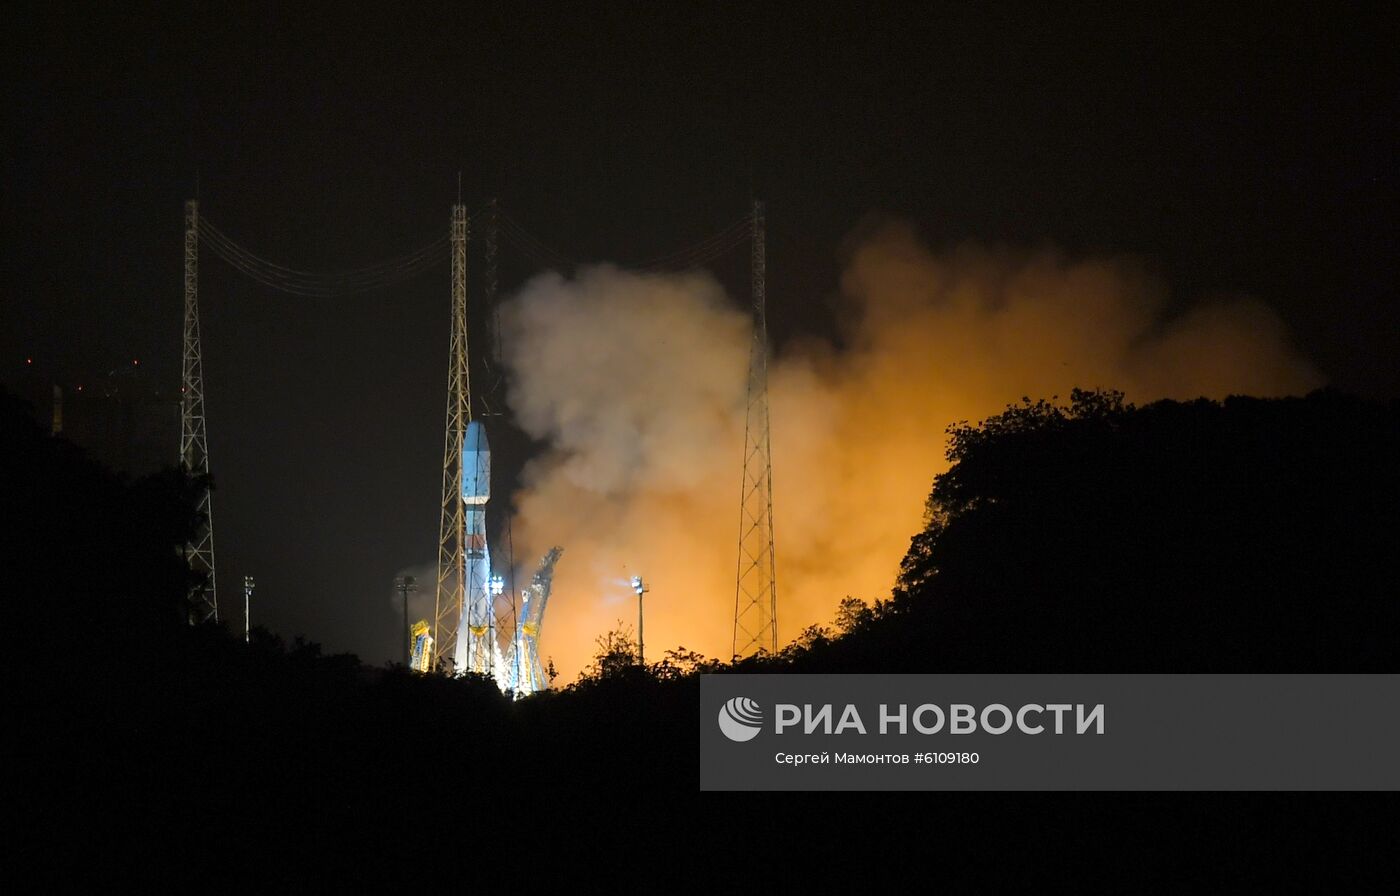 Запуск ракеты "Союз-СТ" c космодрома Куру